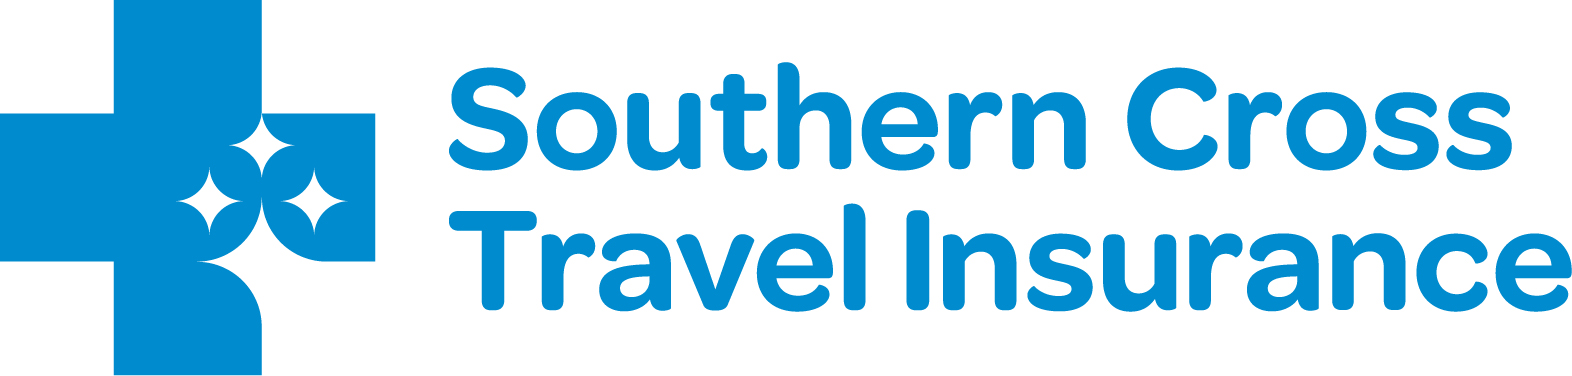 southern cross travel insurance jobs